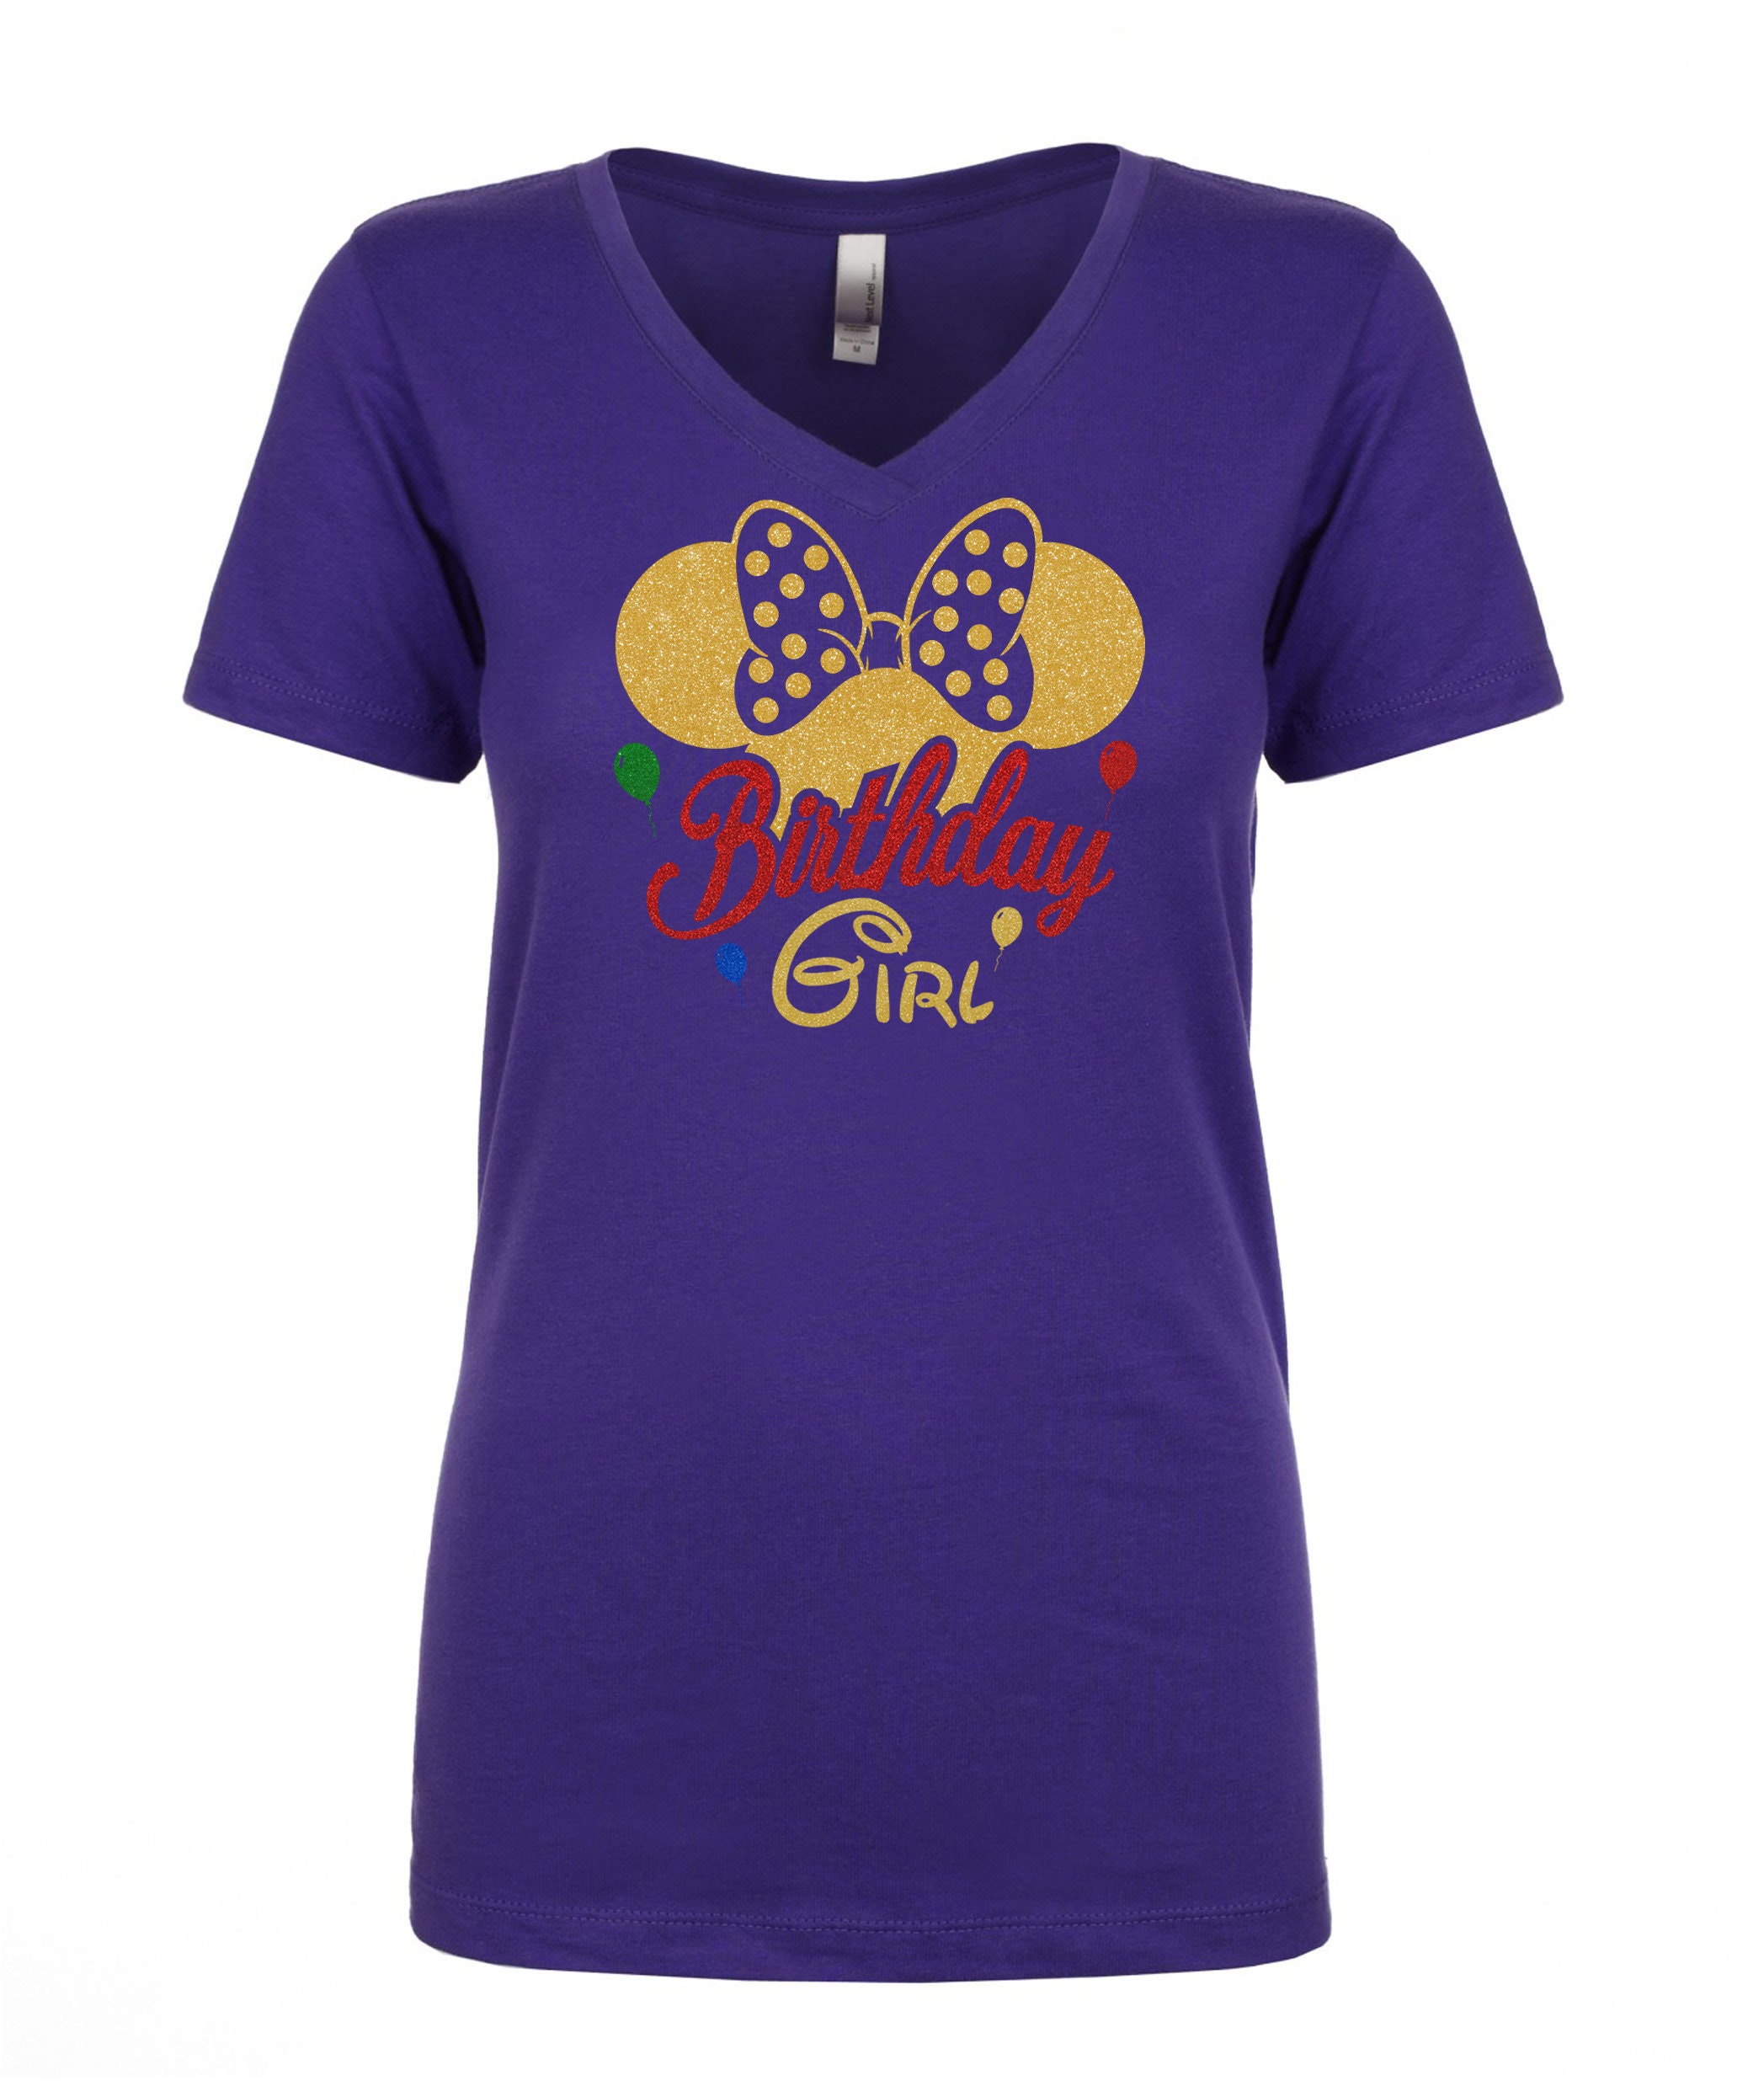 Minnie Mouse Birthday Girl Shirt Glitter on Cotton Next Level | Etsy